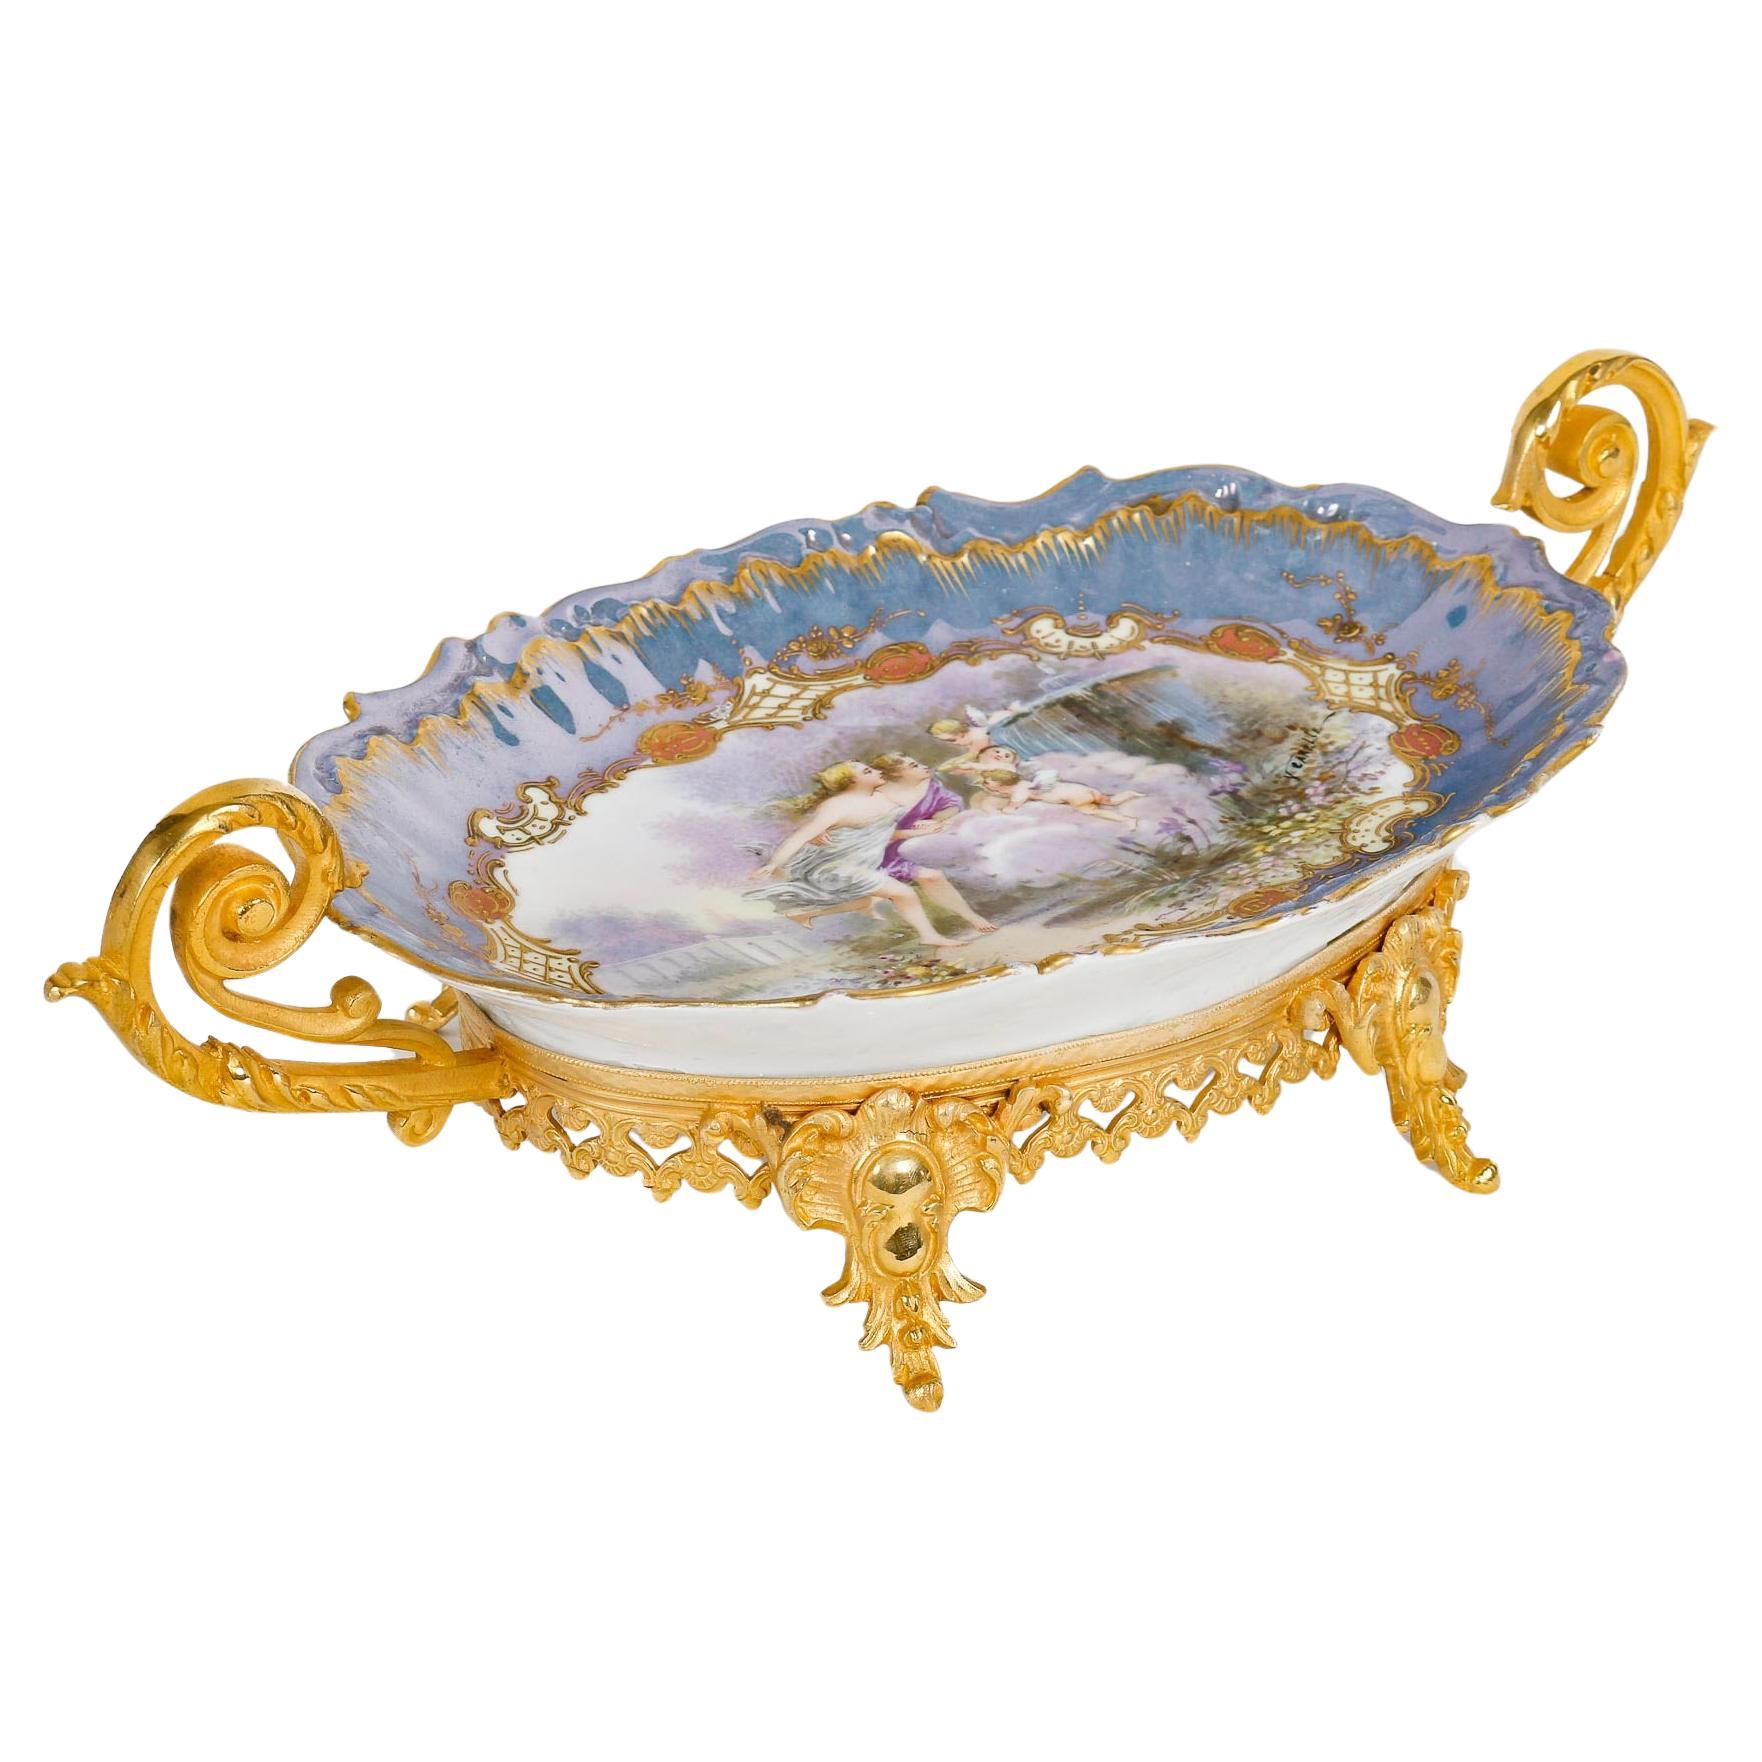 Bol en porcelaine de Sèvres du XIXe siècle, période Napoléon III. en vente